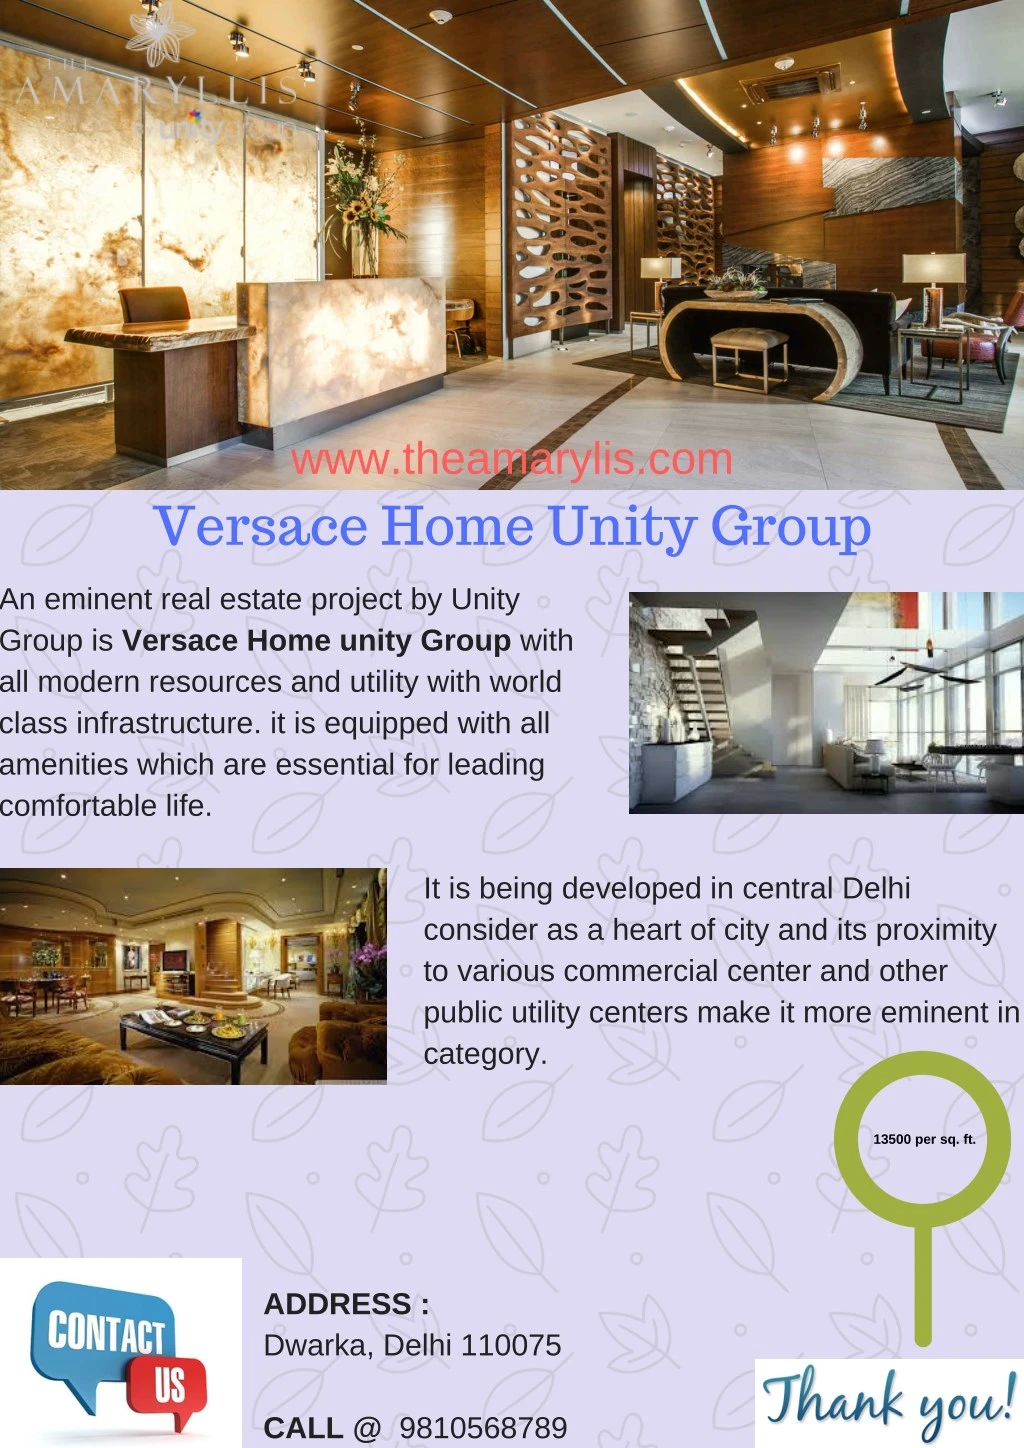 www theamarylis com versace home unity group